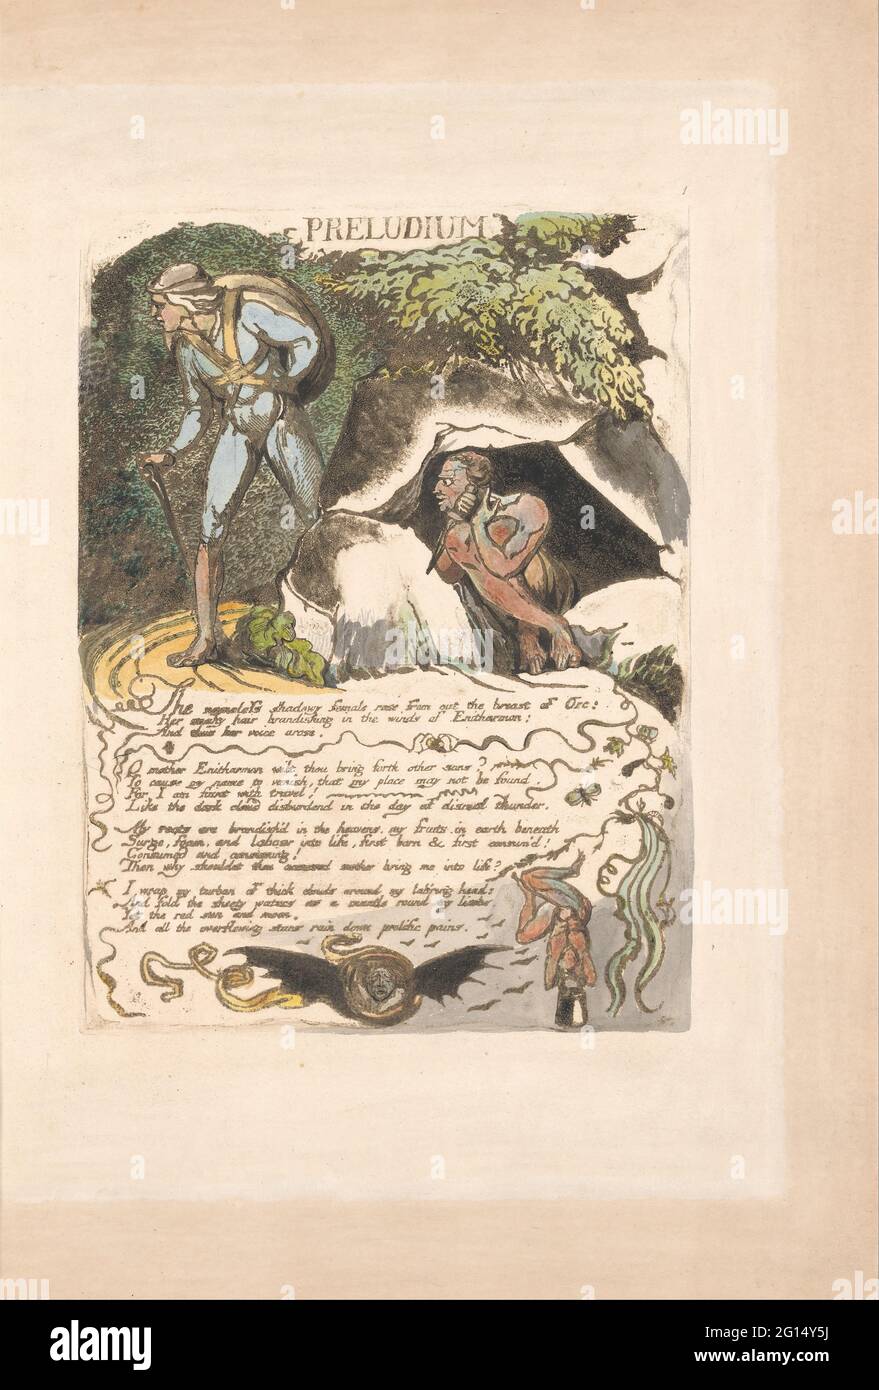 William Blake - Europa. Una Profezia, piastra 3, Preludium Foto Stock